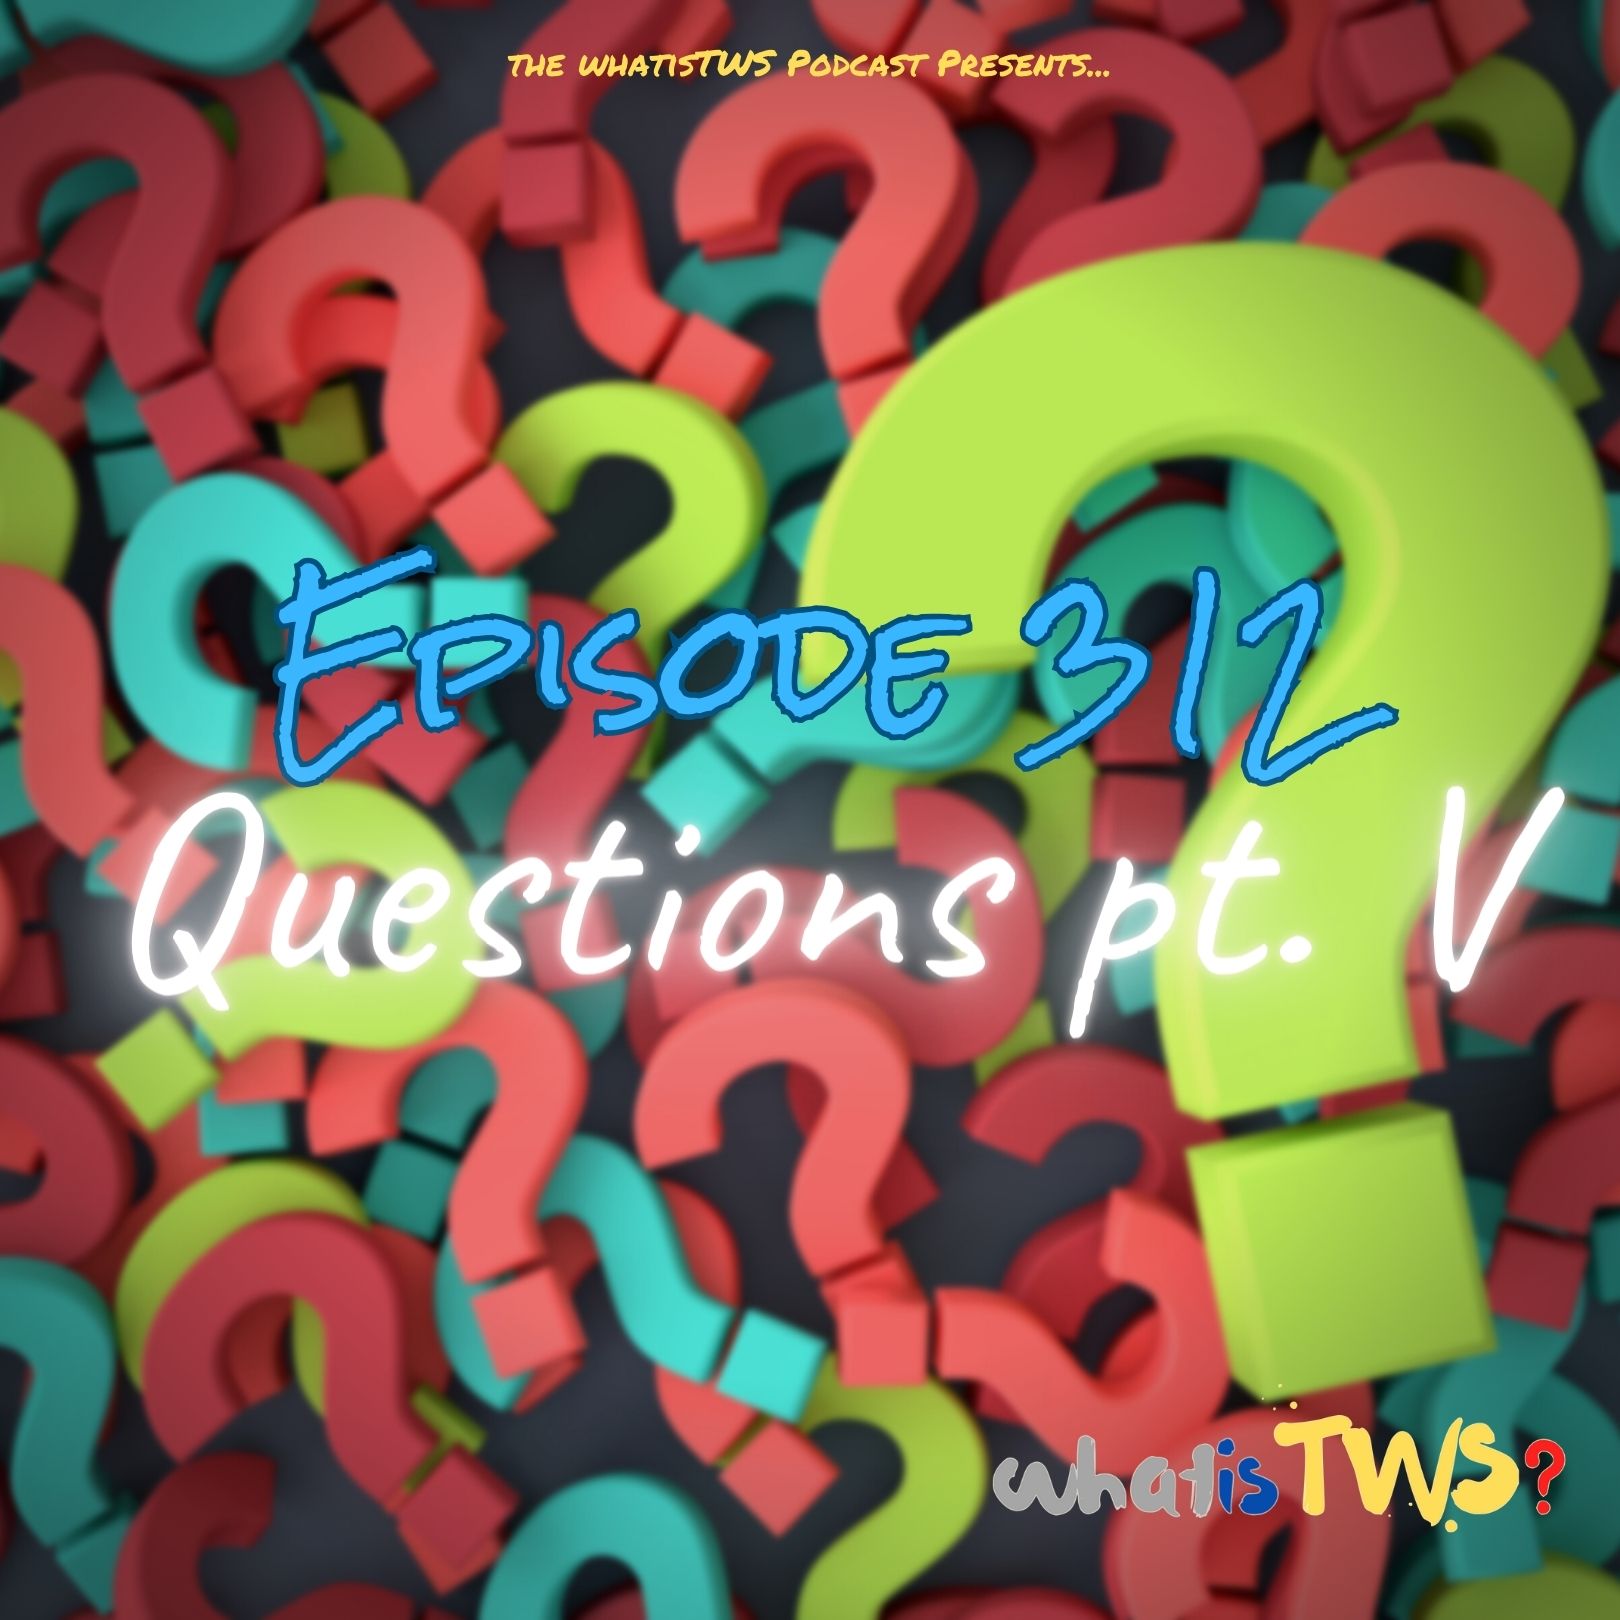 Episode 312 - The Questions Pt. V